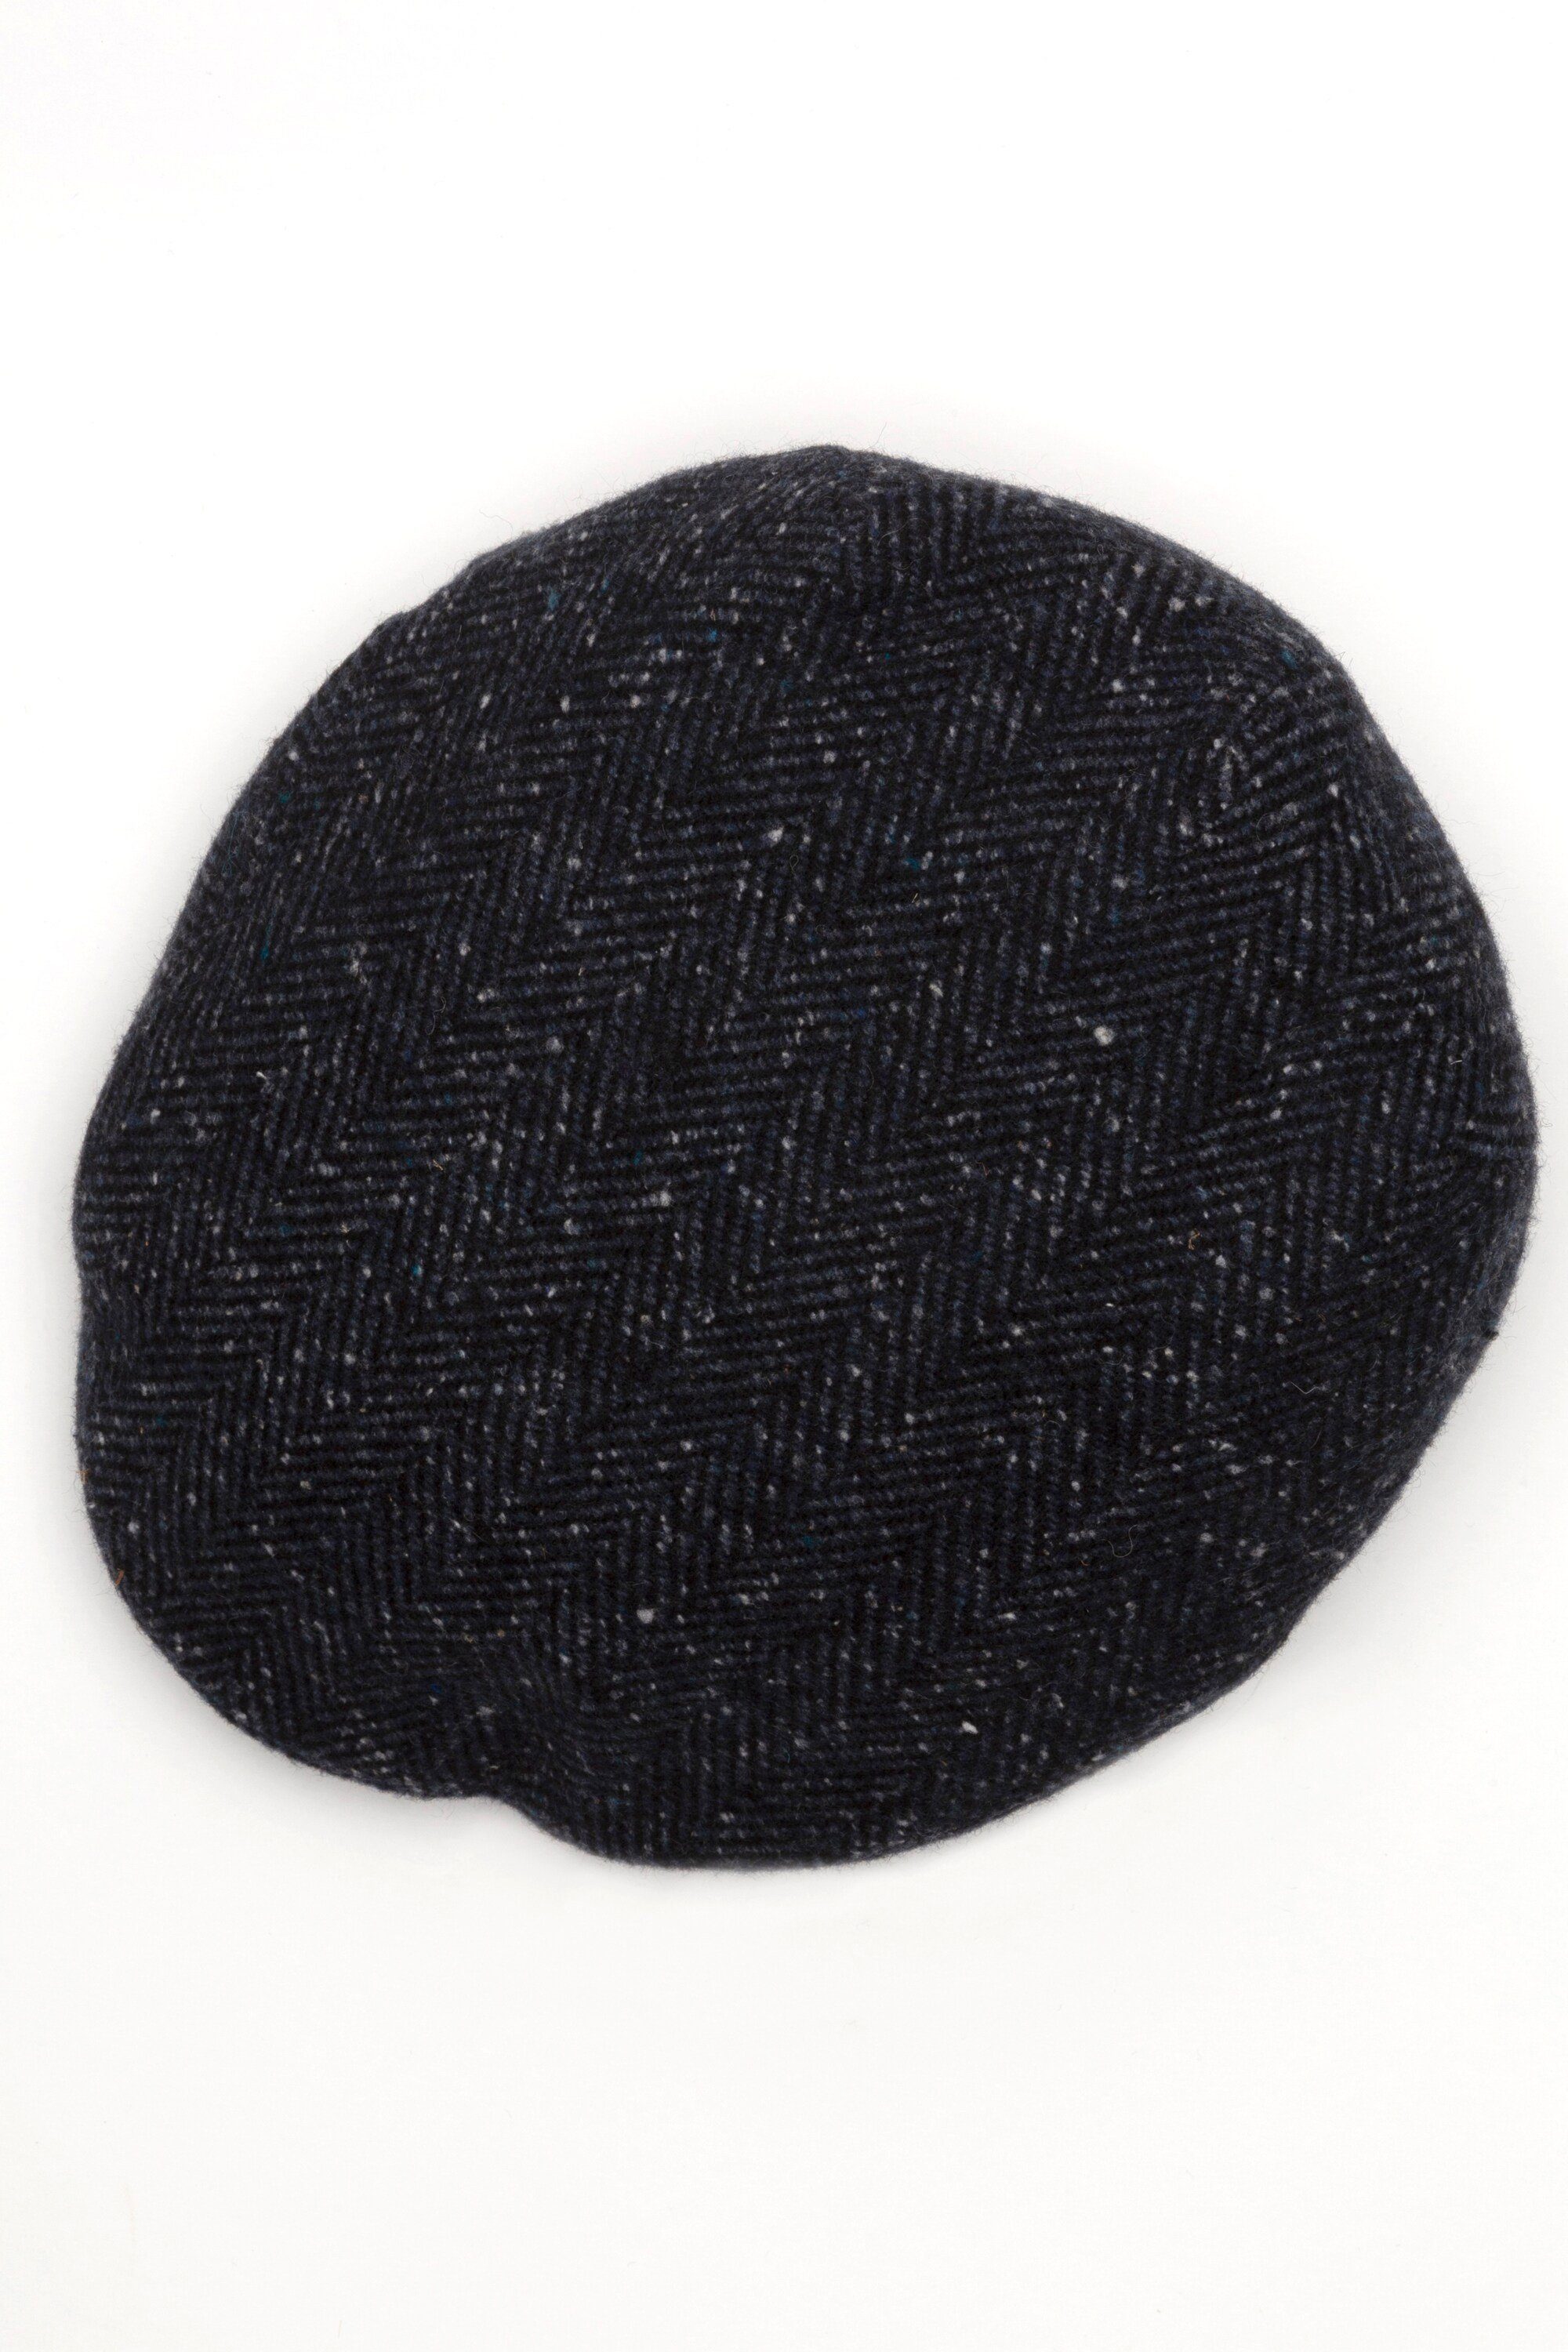 JP1880 Strickhandschuhe Schirmmütze dunkel marine Woll-Qualität Fischgrat-Muster